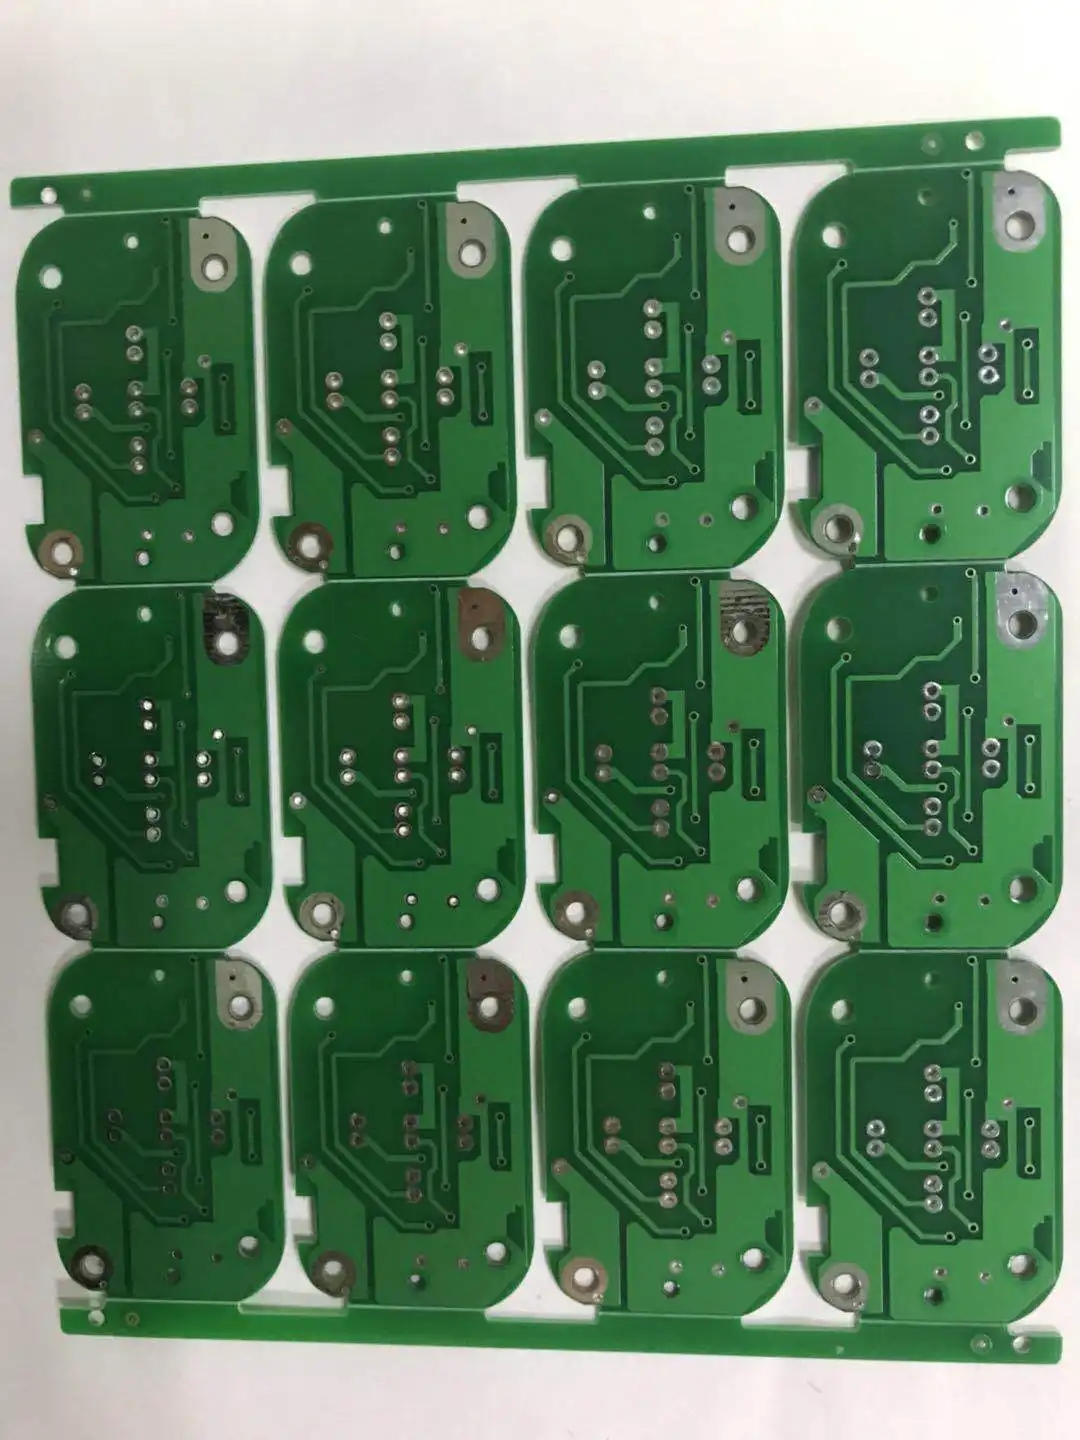 Circuit board factory restores circuit schematic diagram according to PCB circuit board